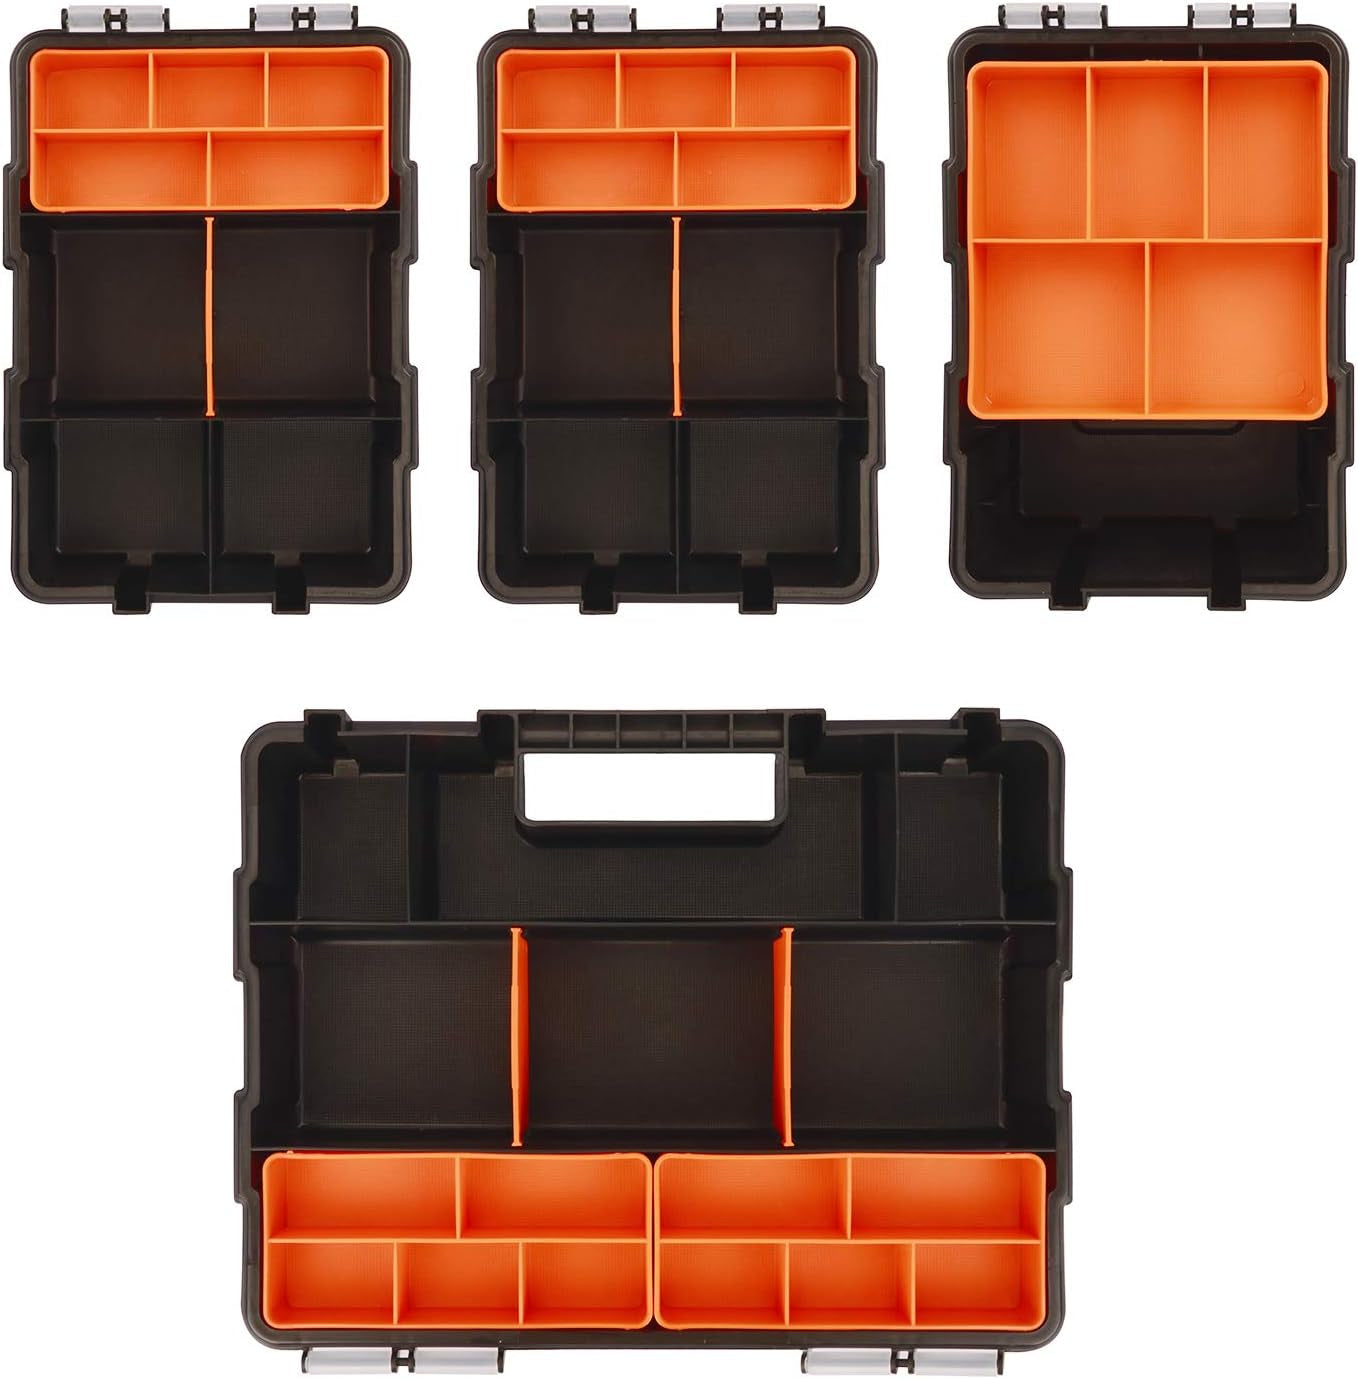 4 Piece Set Toolbox Hardware & Parts Organizers Versatile and Durable Storage Tool Box